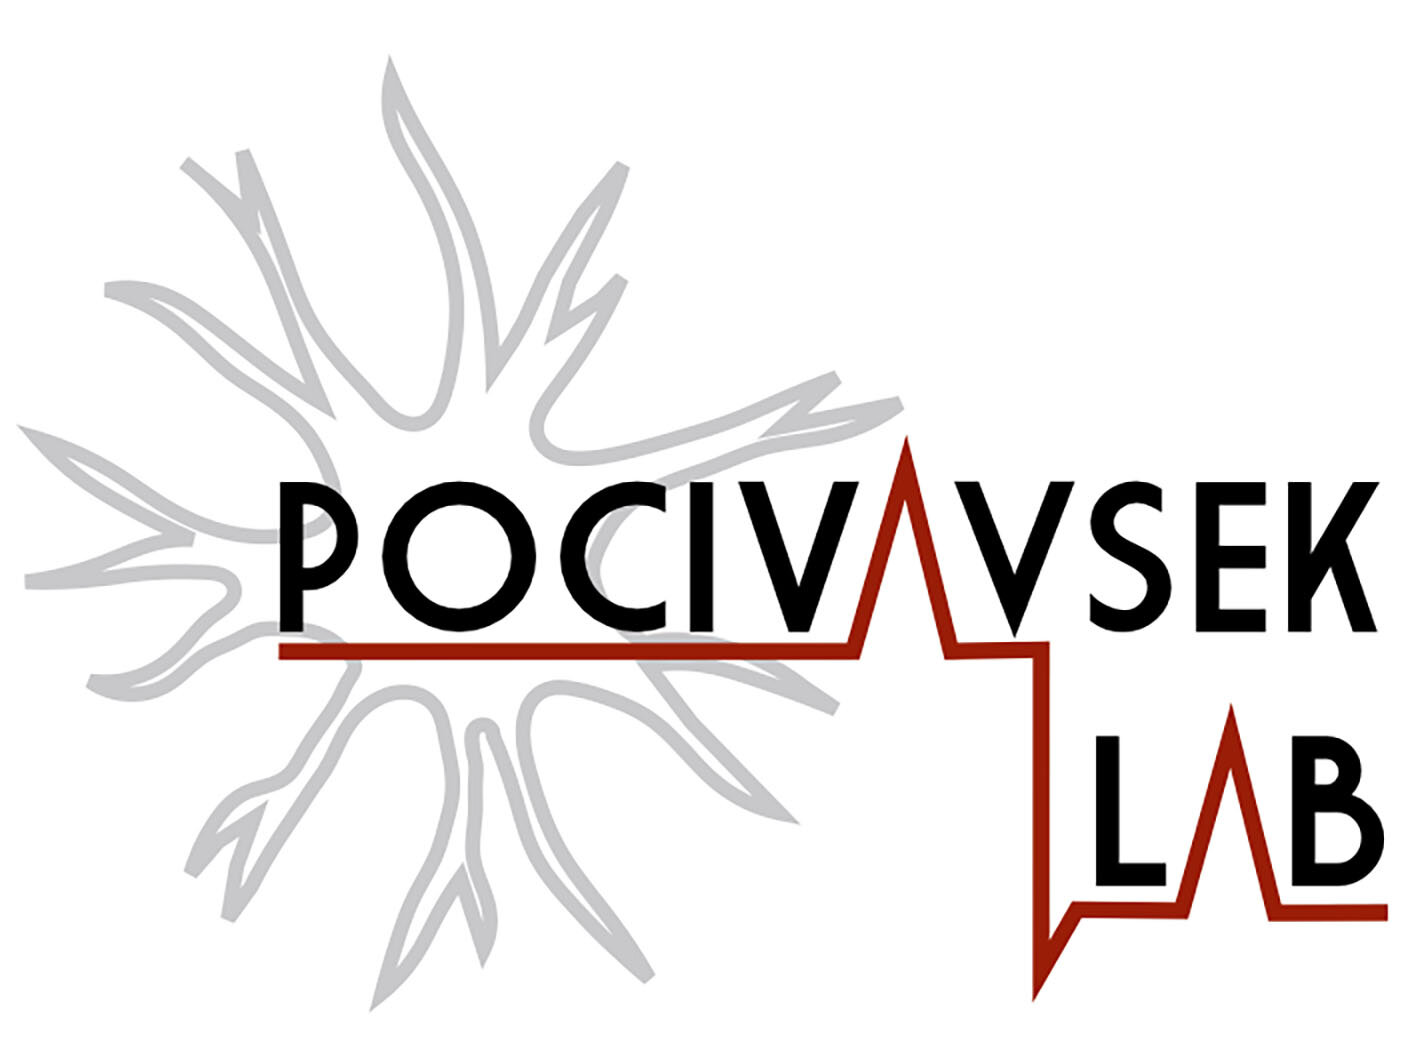 The Pocivavsek Lab